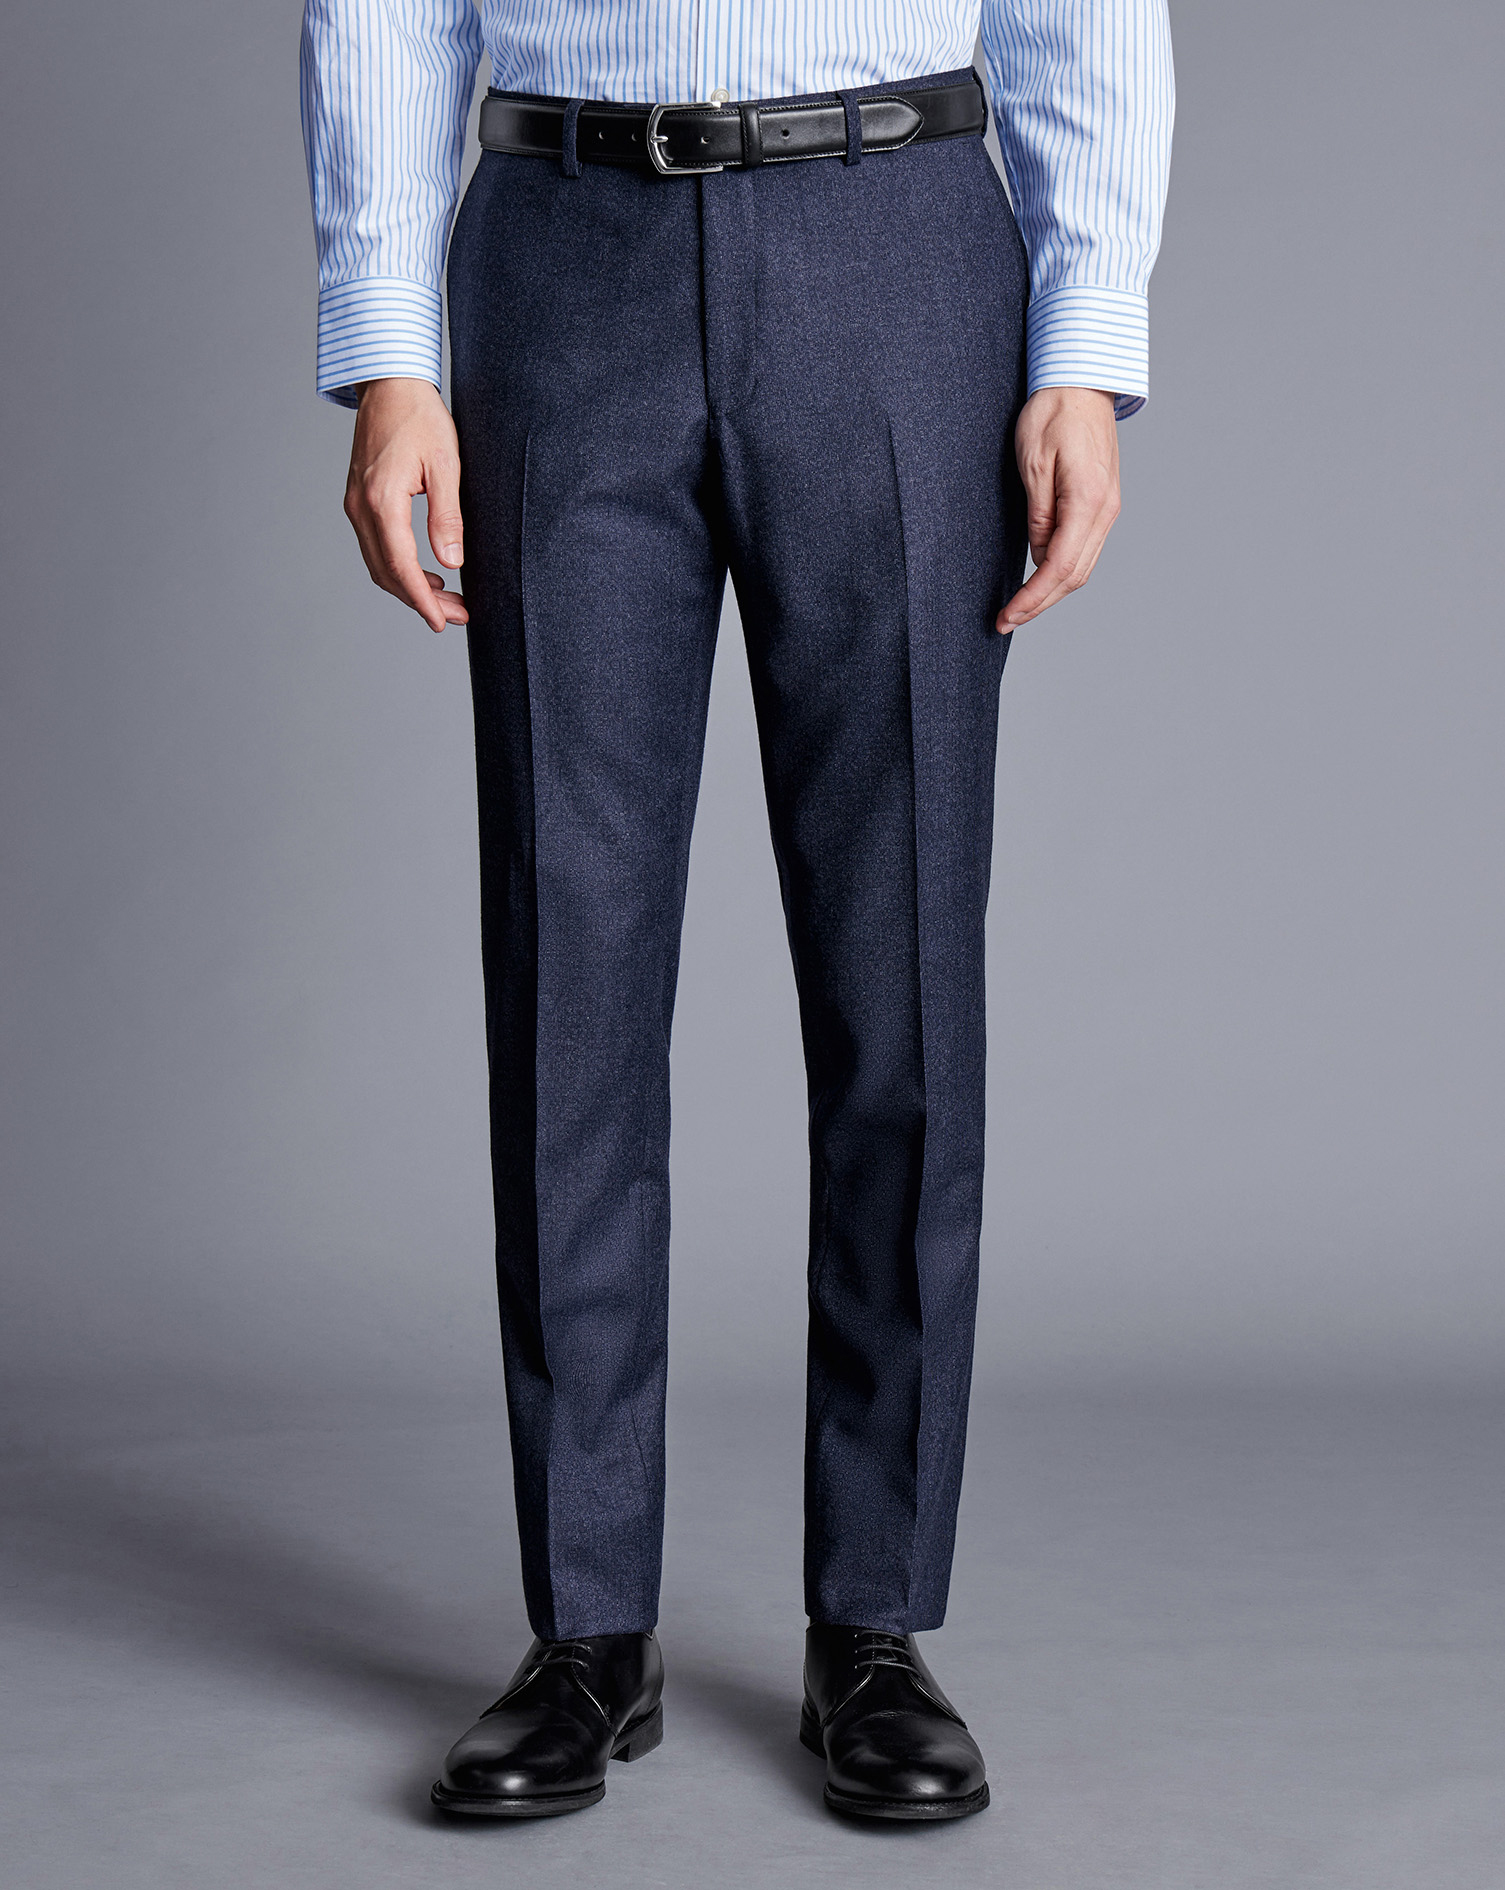 Men's Charles Tyrwhitt Italian Pindot Suit Trousers - Denim Blue Size 32/32 Wool
